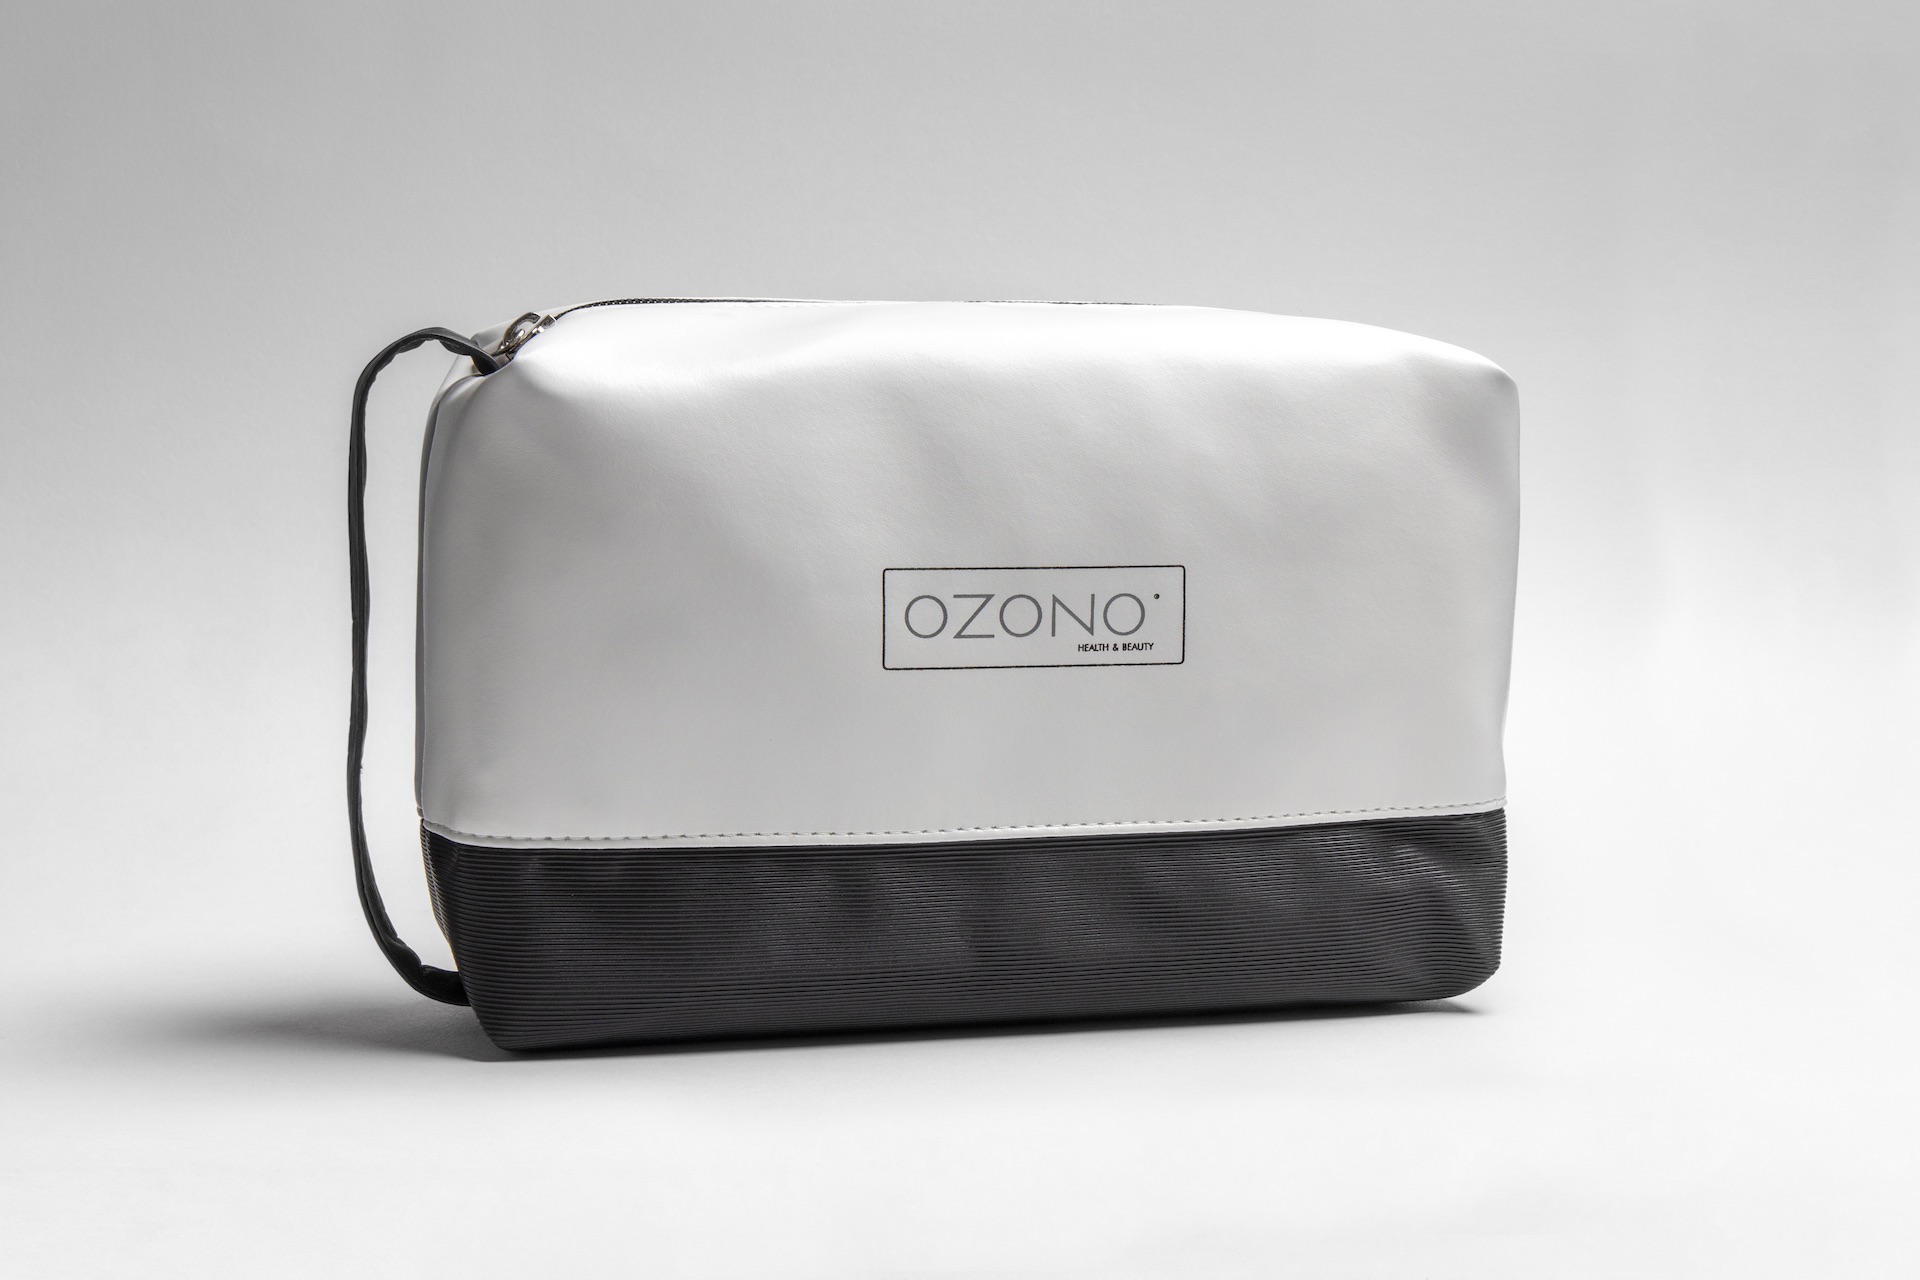 Trousse - Ozono Health & Beauty